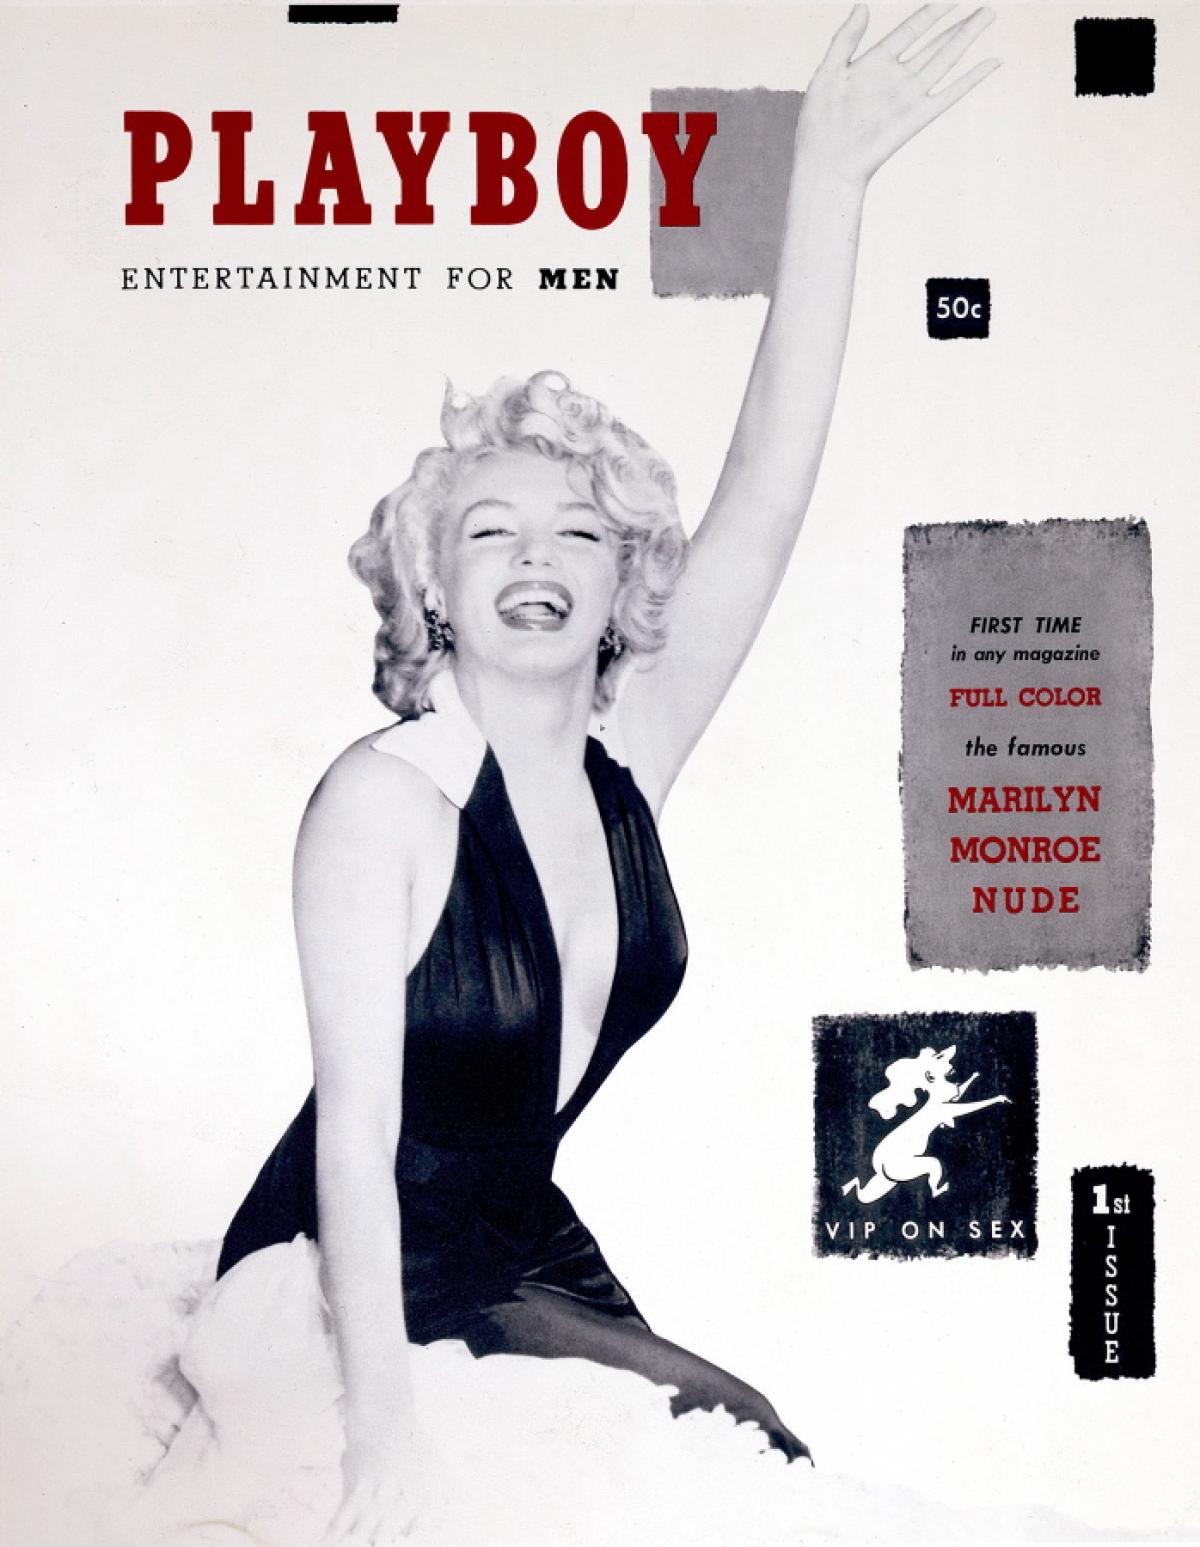 Playboy 1953 (Marilyn Monroe)